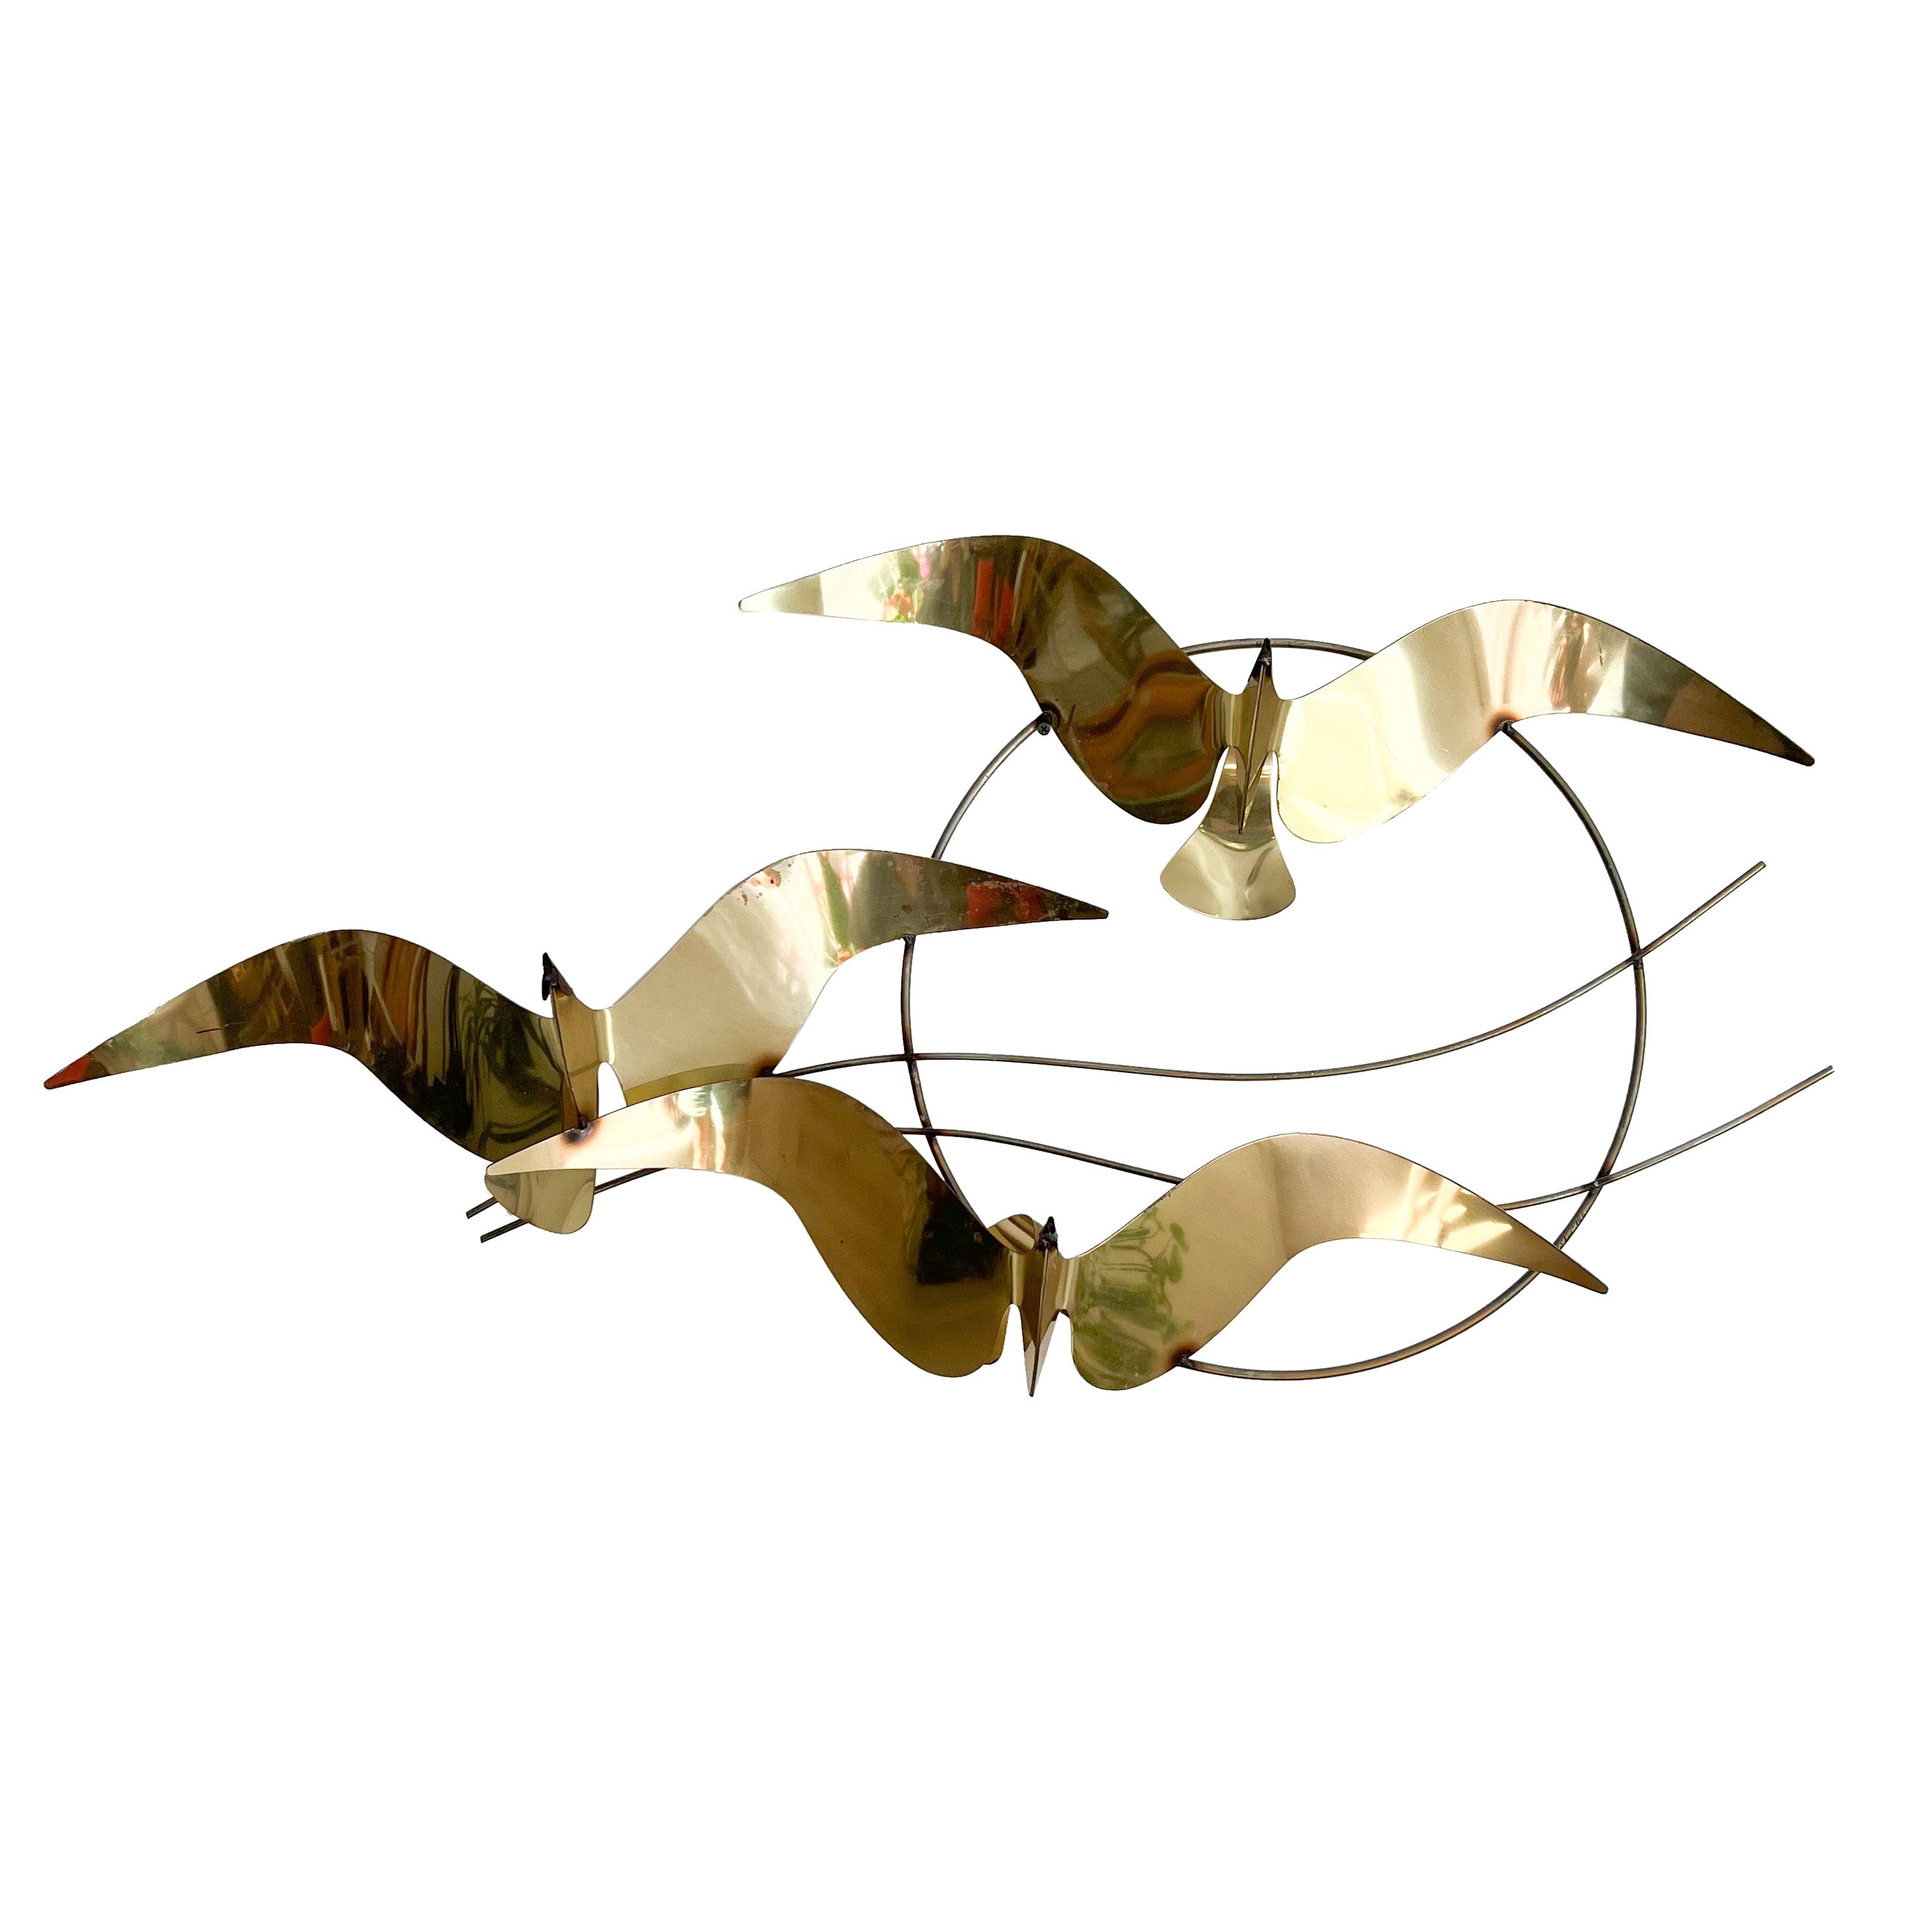 C. Jere Seagulls in Flight Metal Art For Sale